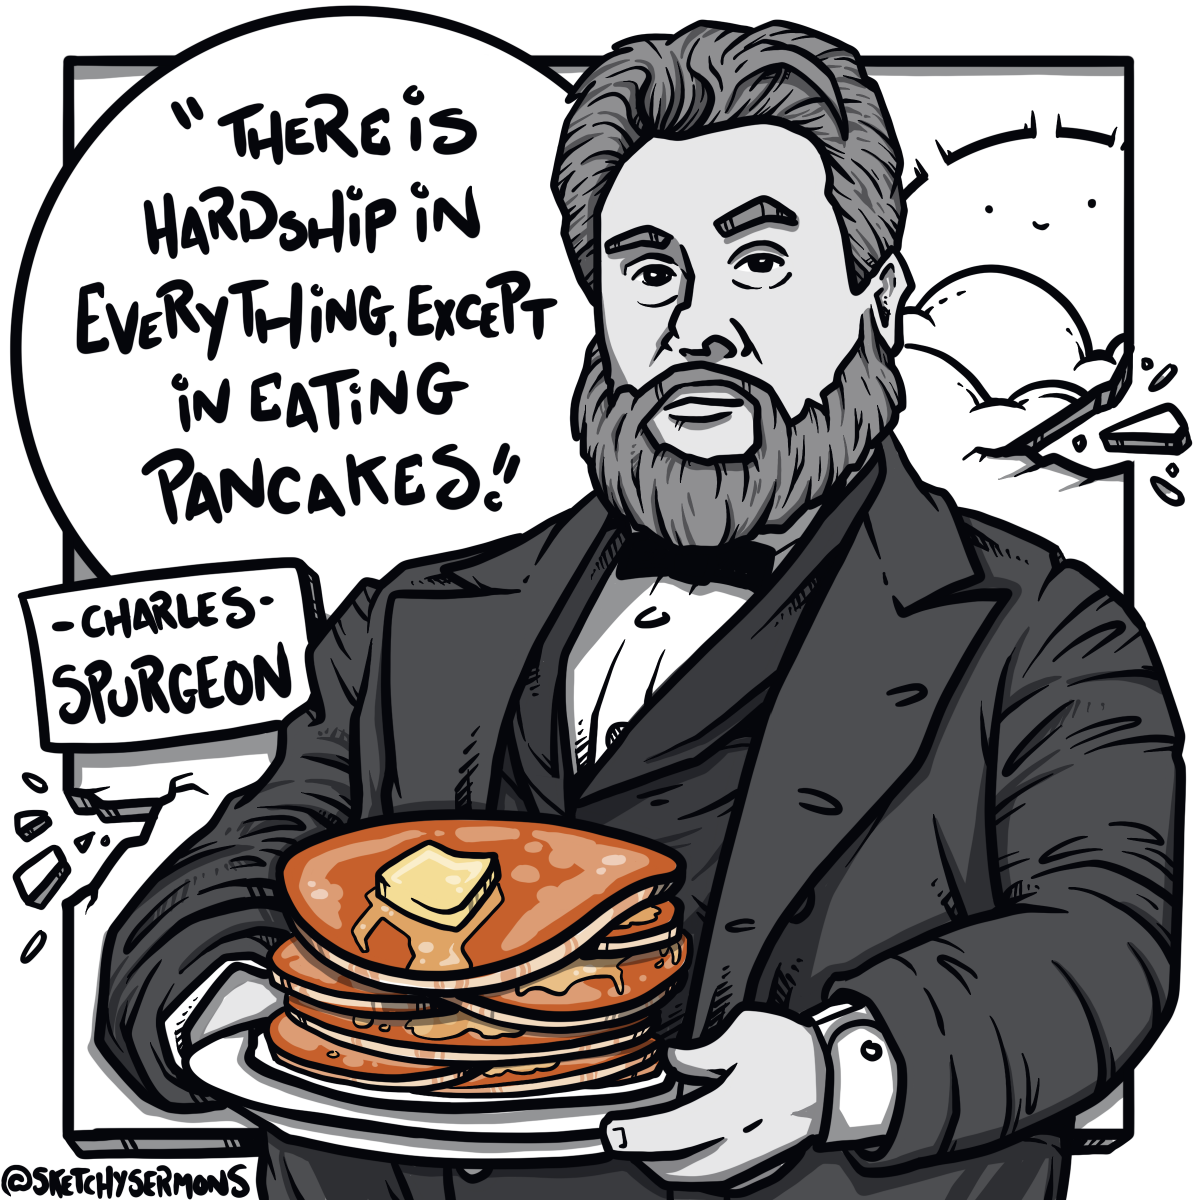 Charles Spurgeon on Pancakes